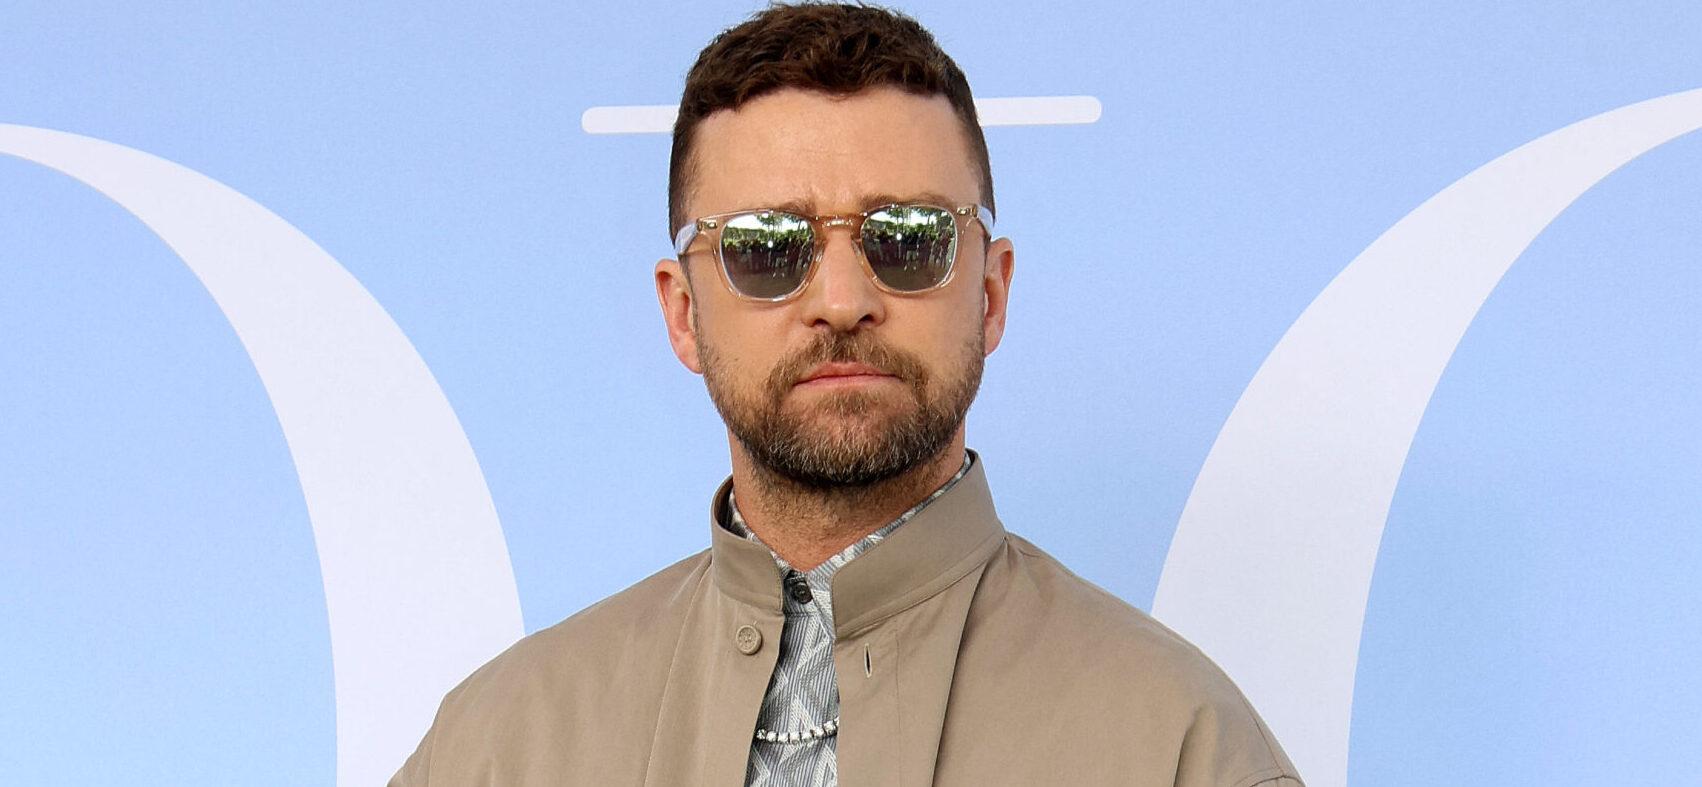 The Bizarre Way Justin Timberlake Announced His Music World Tour